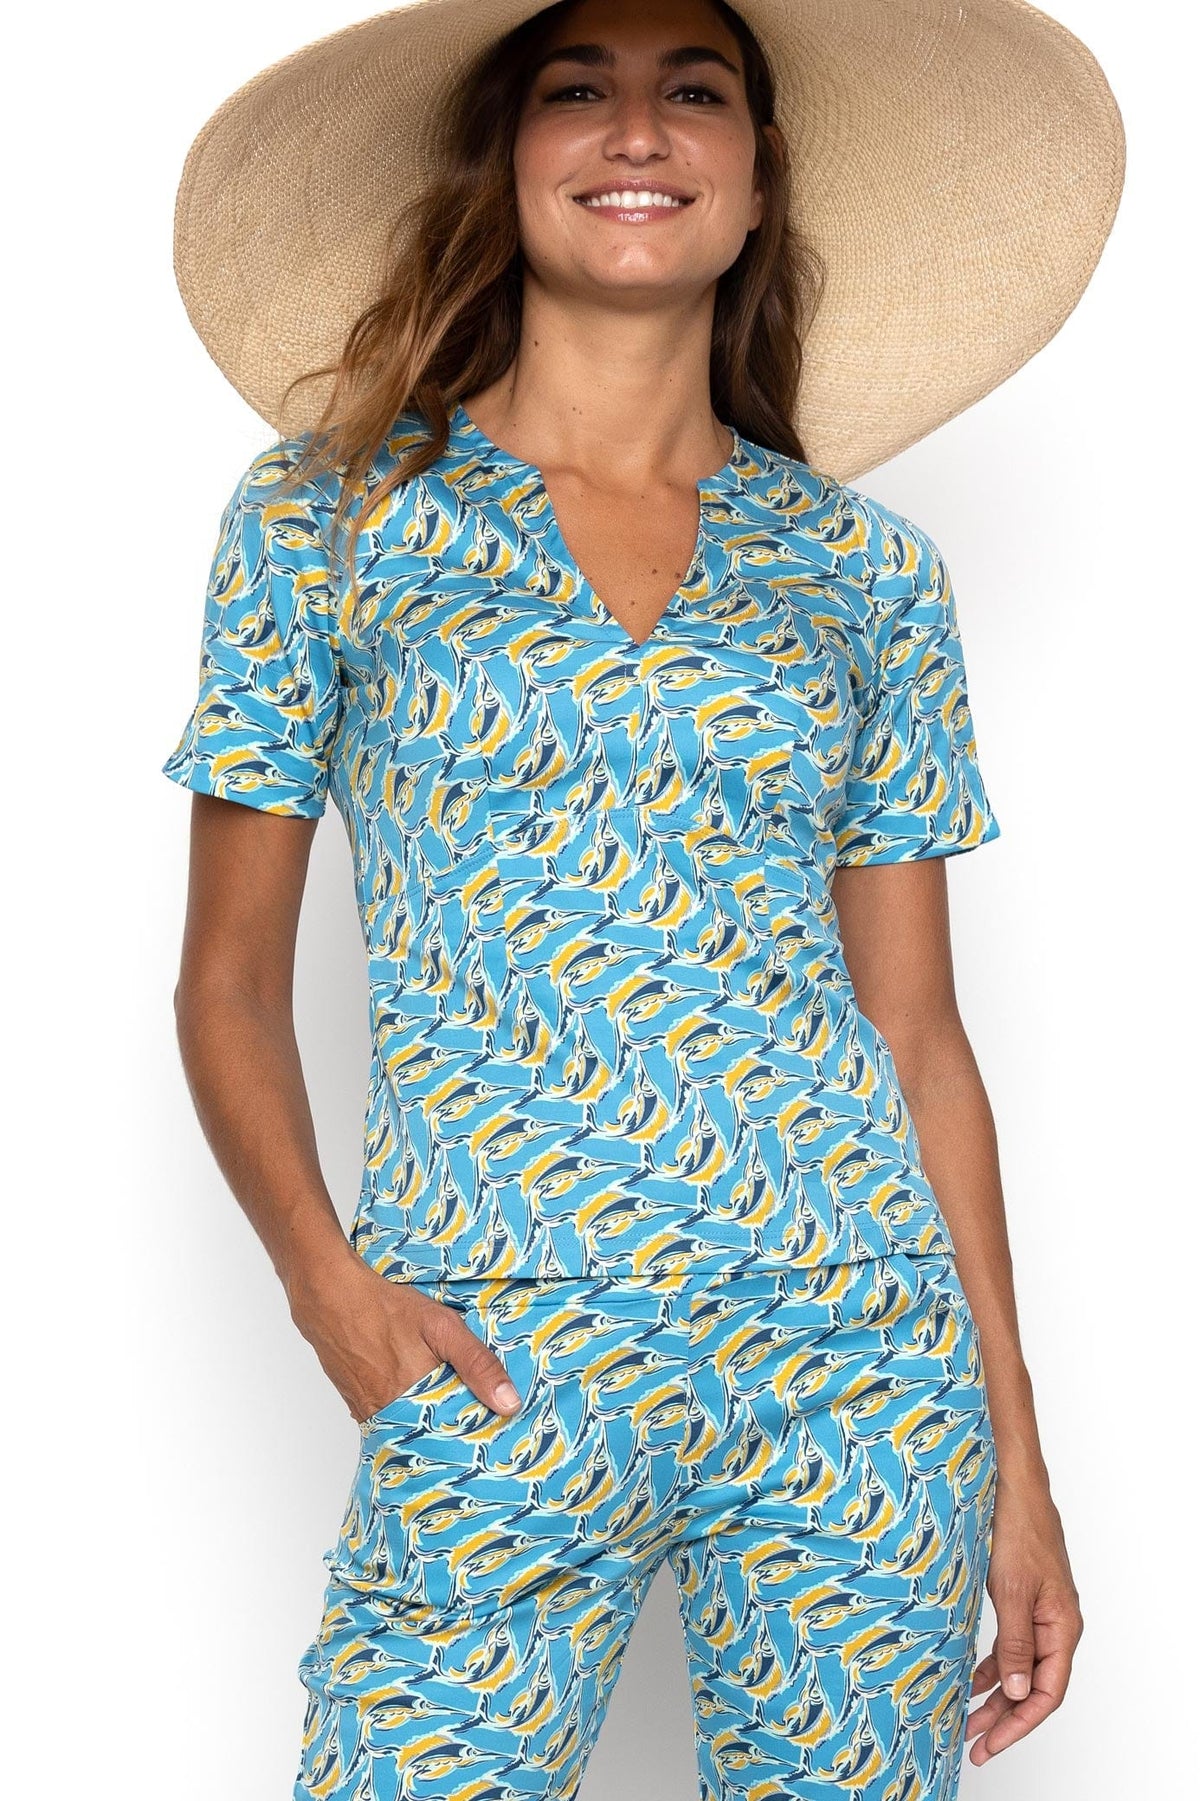 W.E.T. by Ines Schneider Shirt M1475.6 / S Shirt Cosma 23 / Marlin mode hamburg print sommerkleid Unique Prints Summer Dress Handdesignierte Prints Print